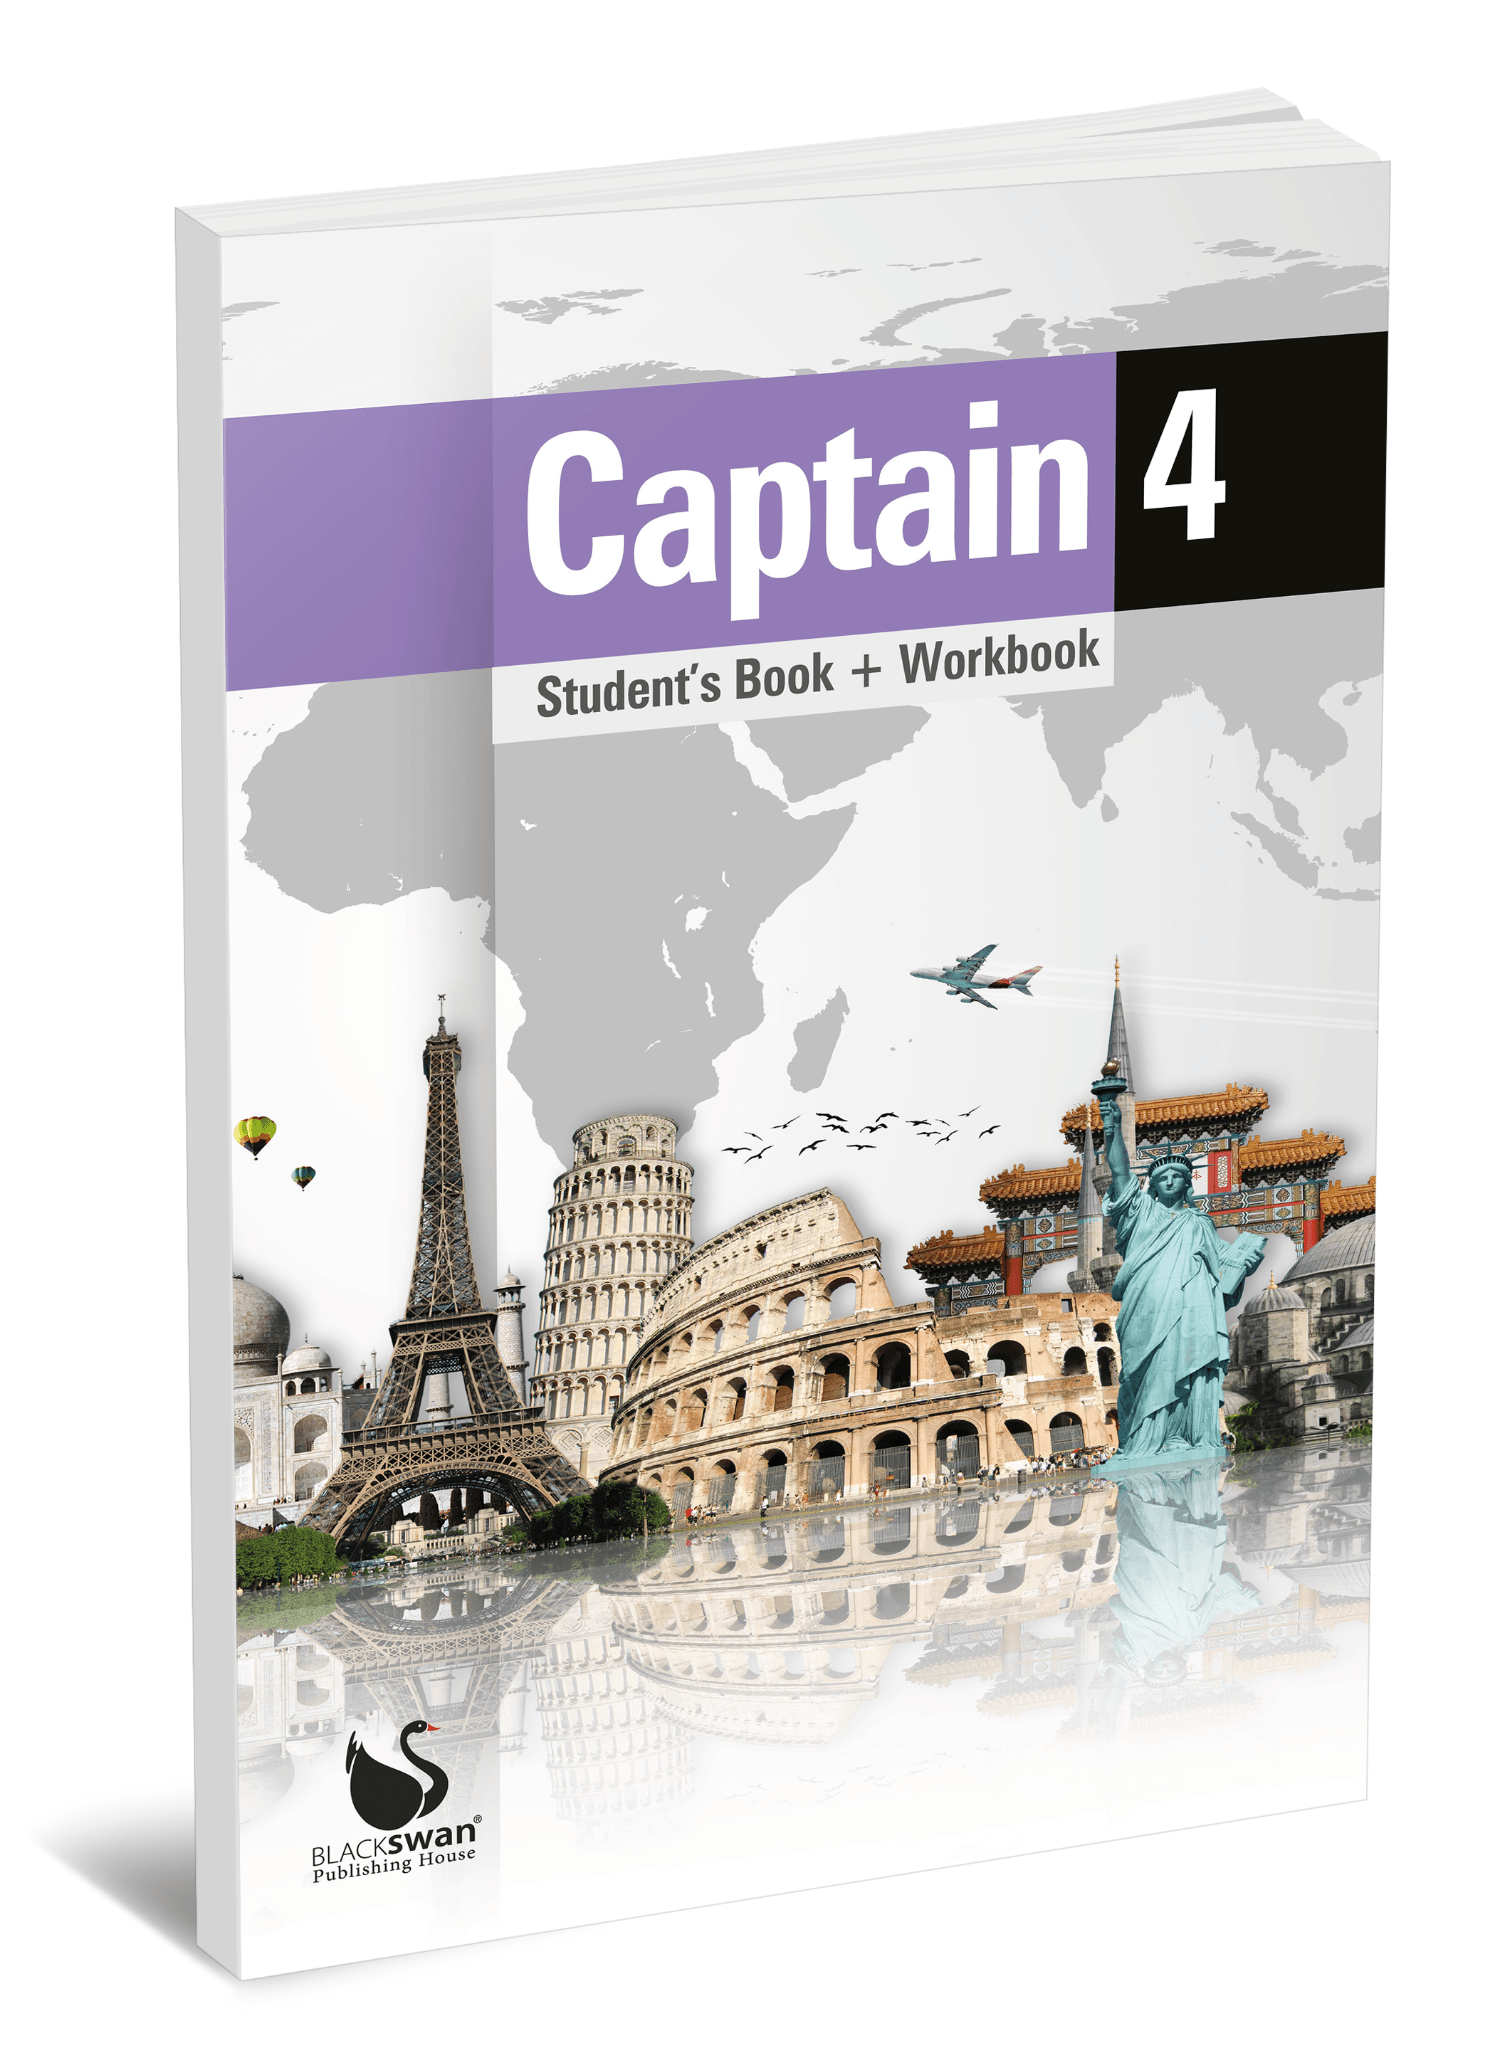 Captain 4 Student’s Book + Workbook